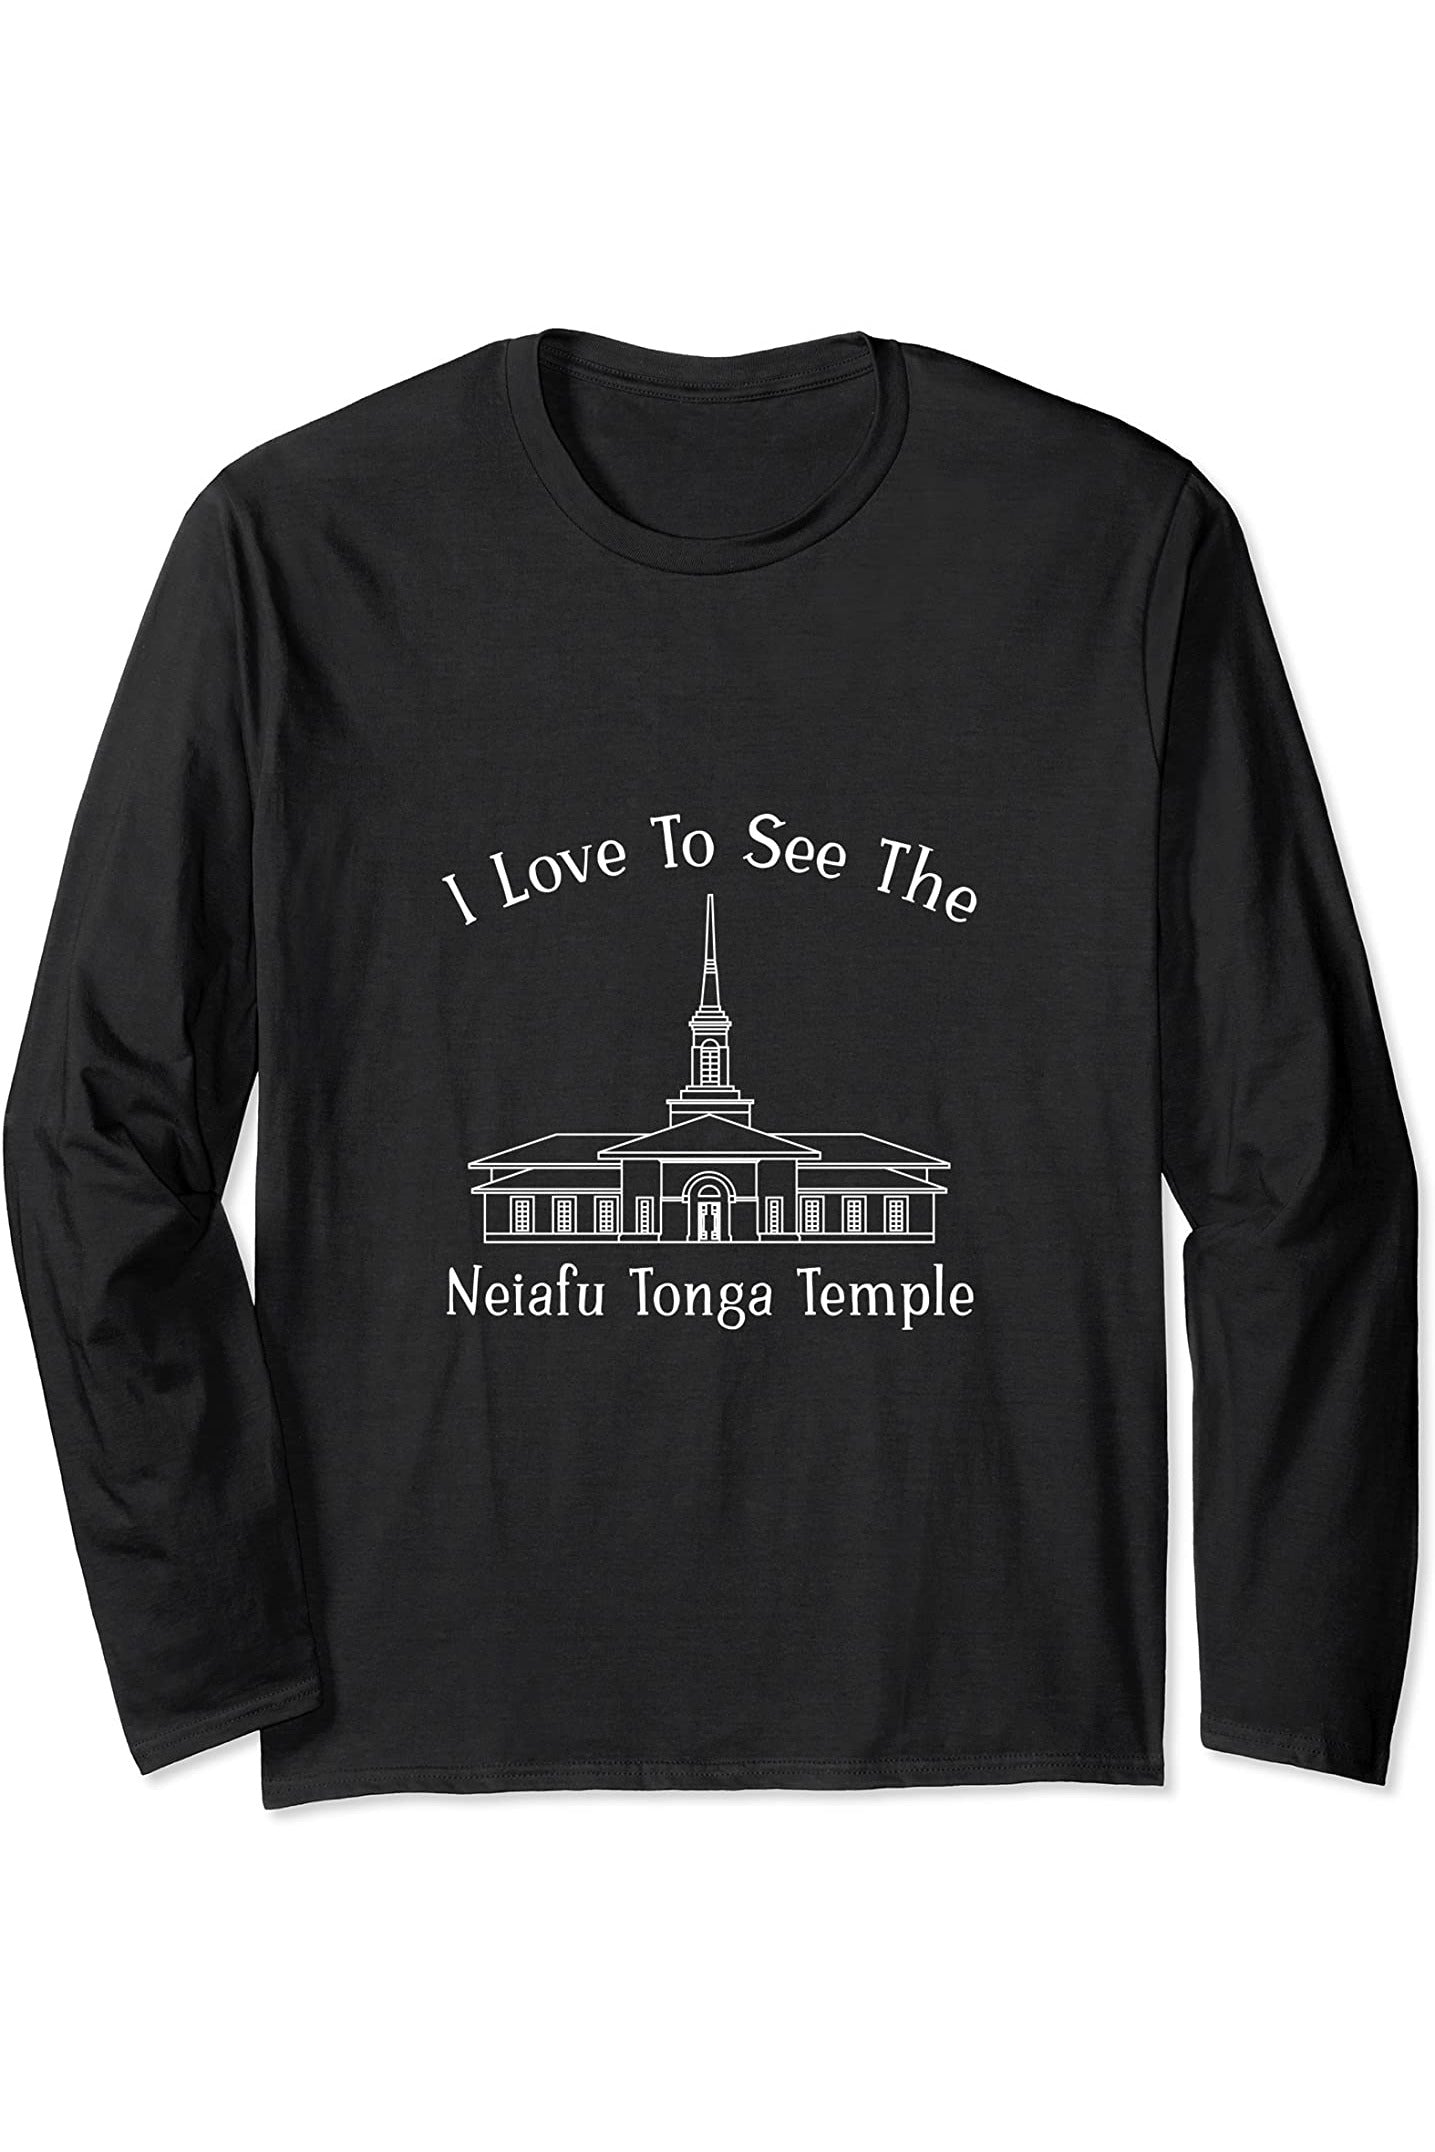 Neiafu Tonga Temple Long Sleeve T-Shirt - Happy Style (English) US